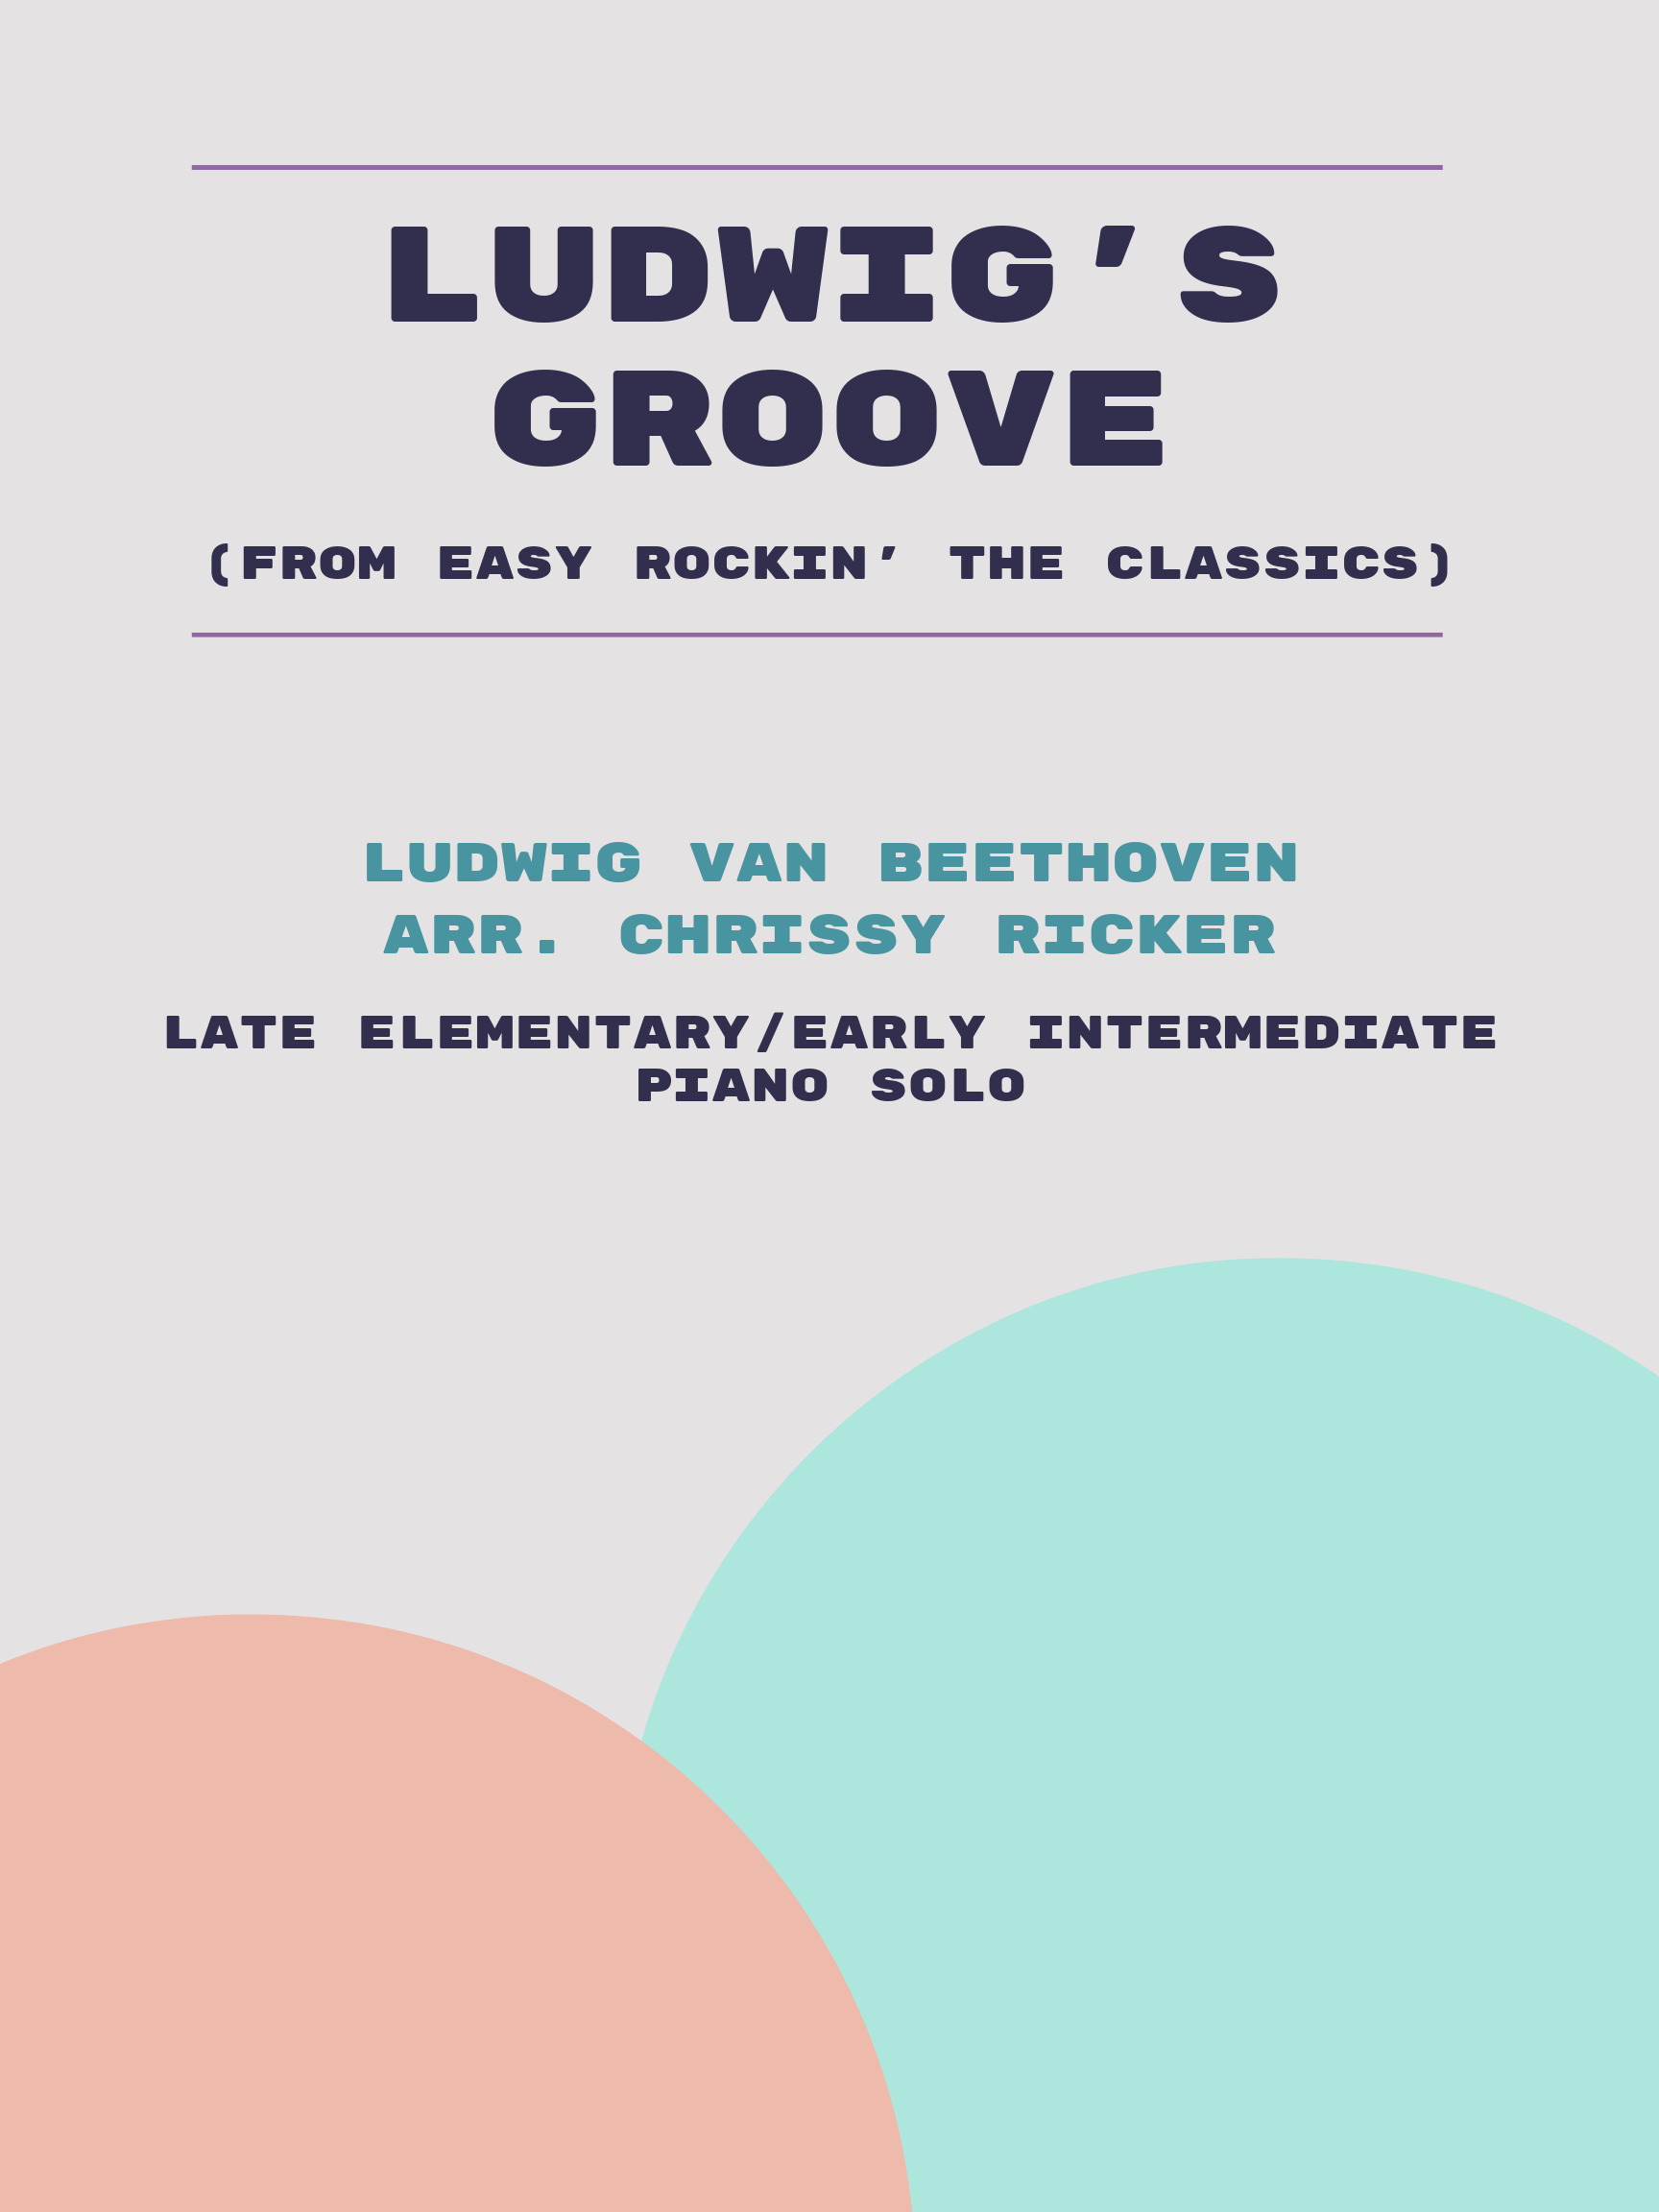 Ludwig's Groove by Ludwig van Beethoven